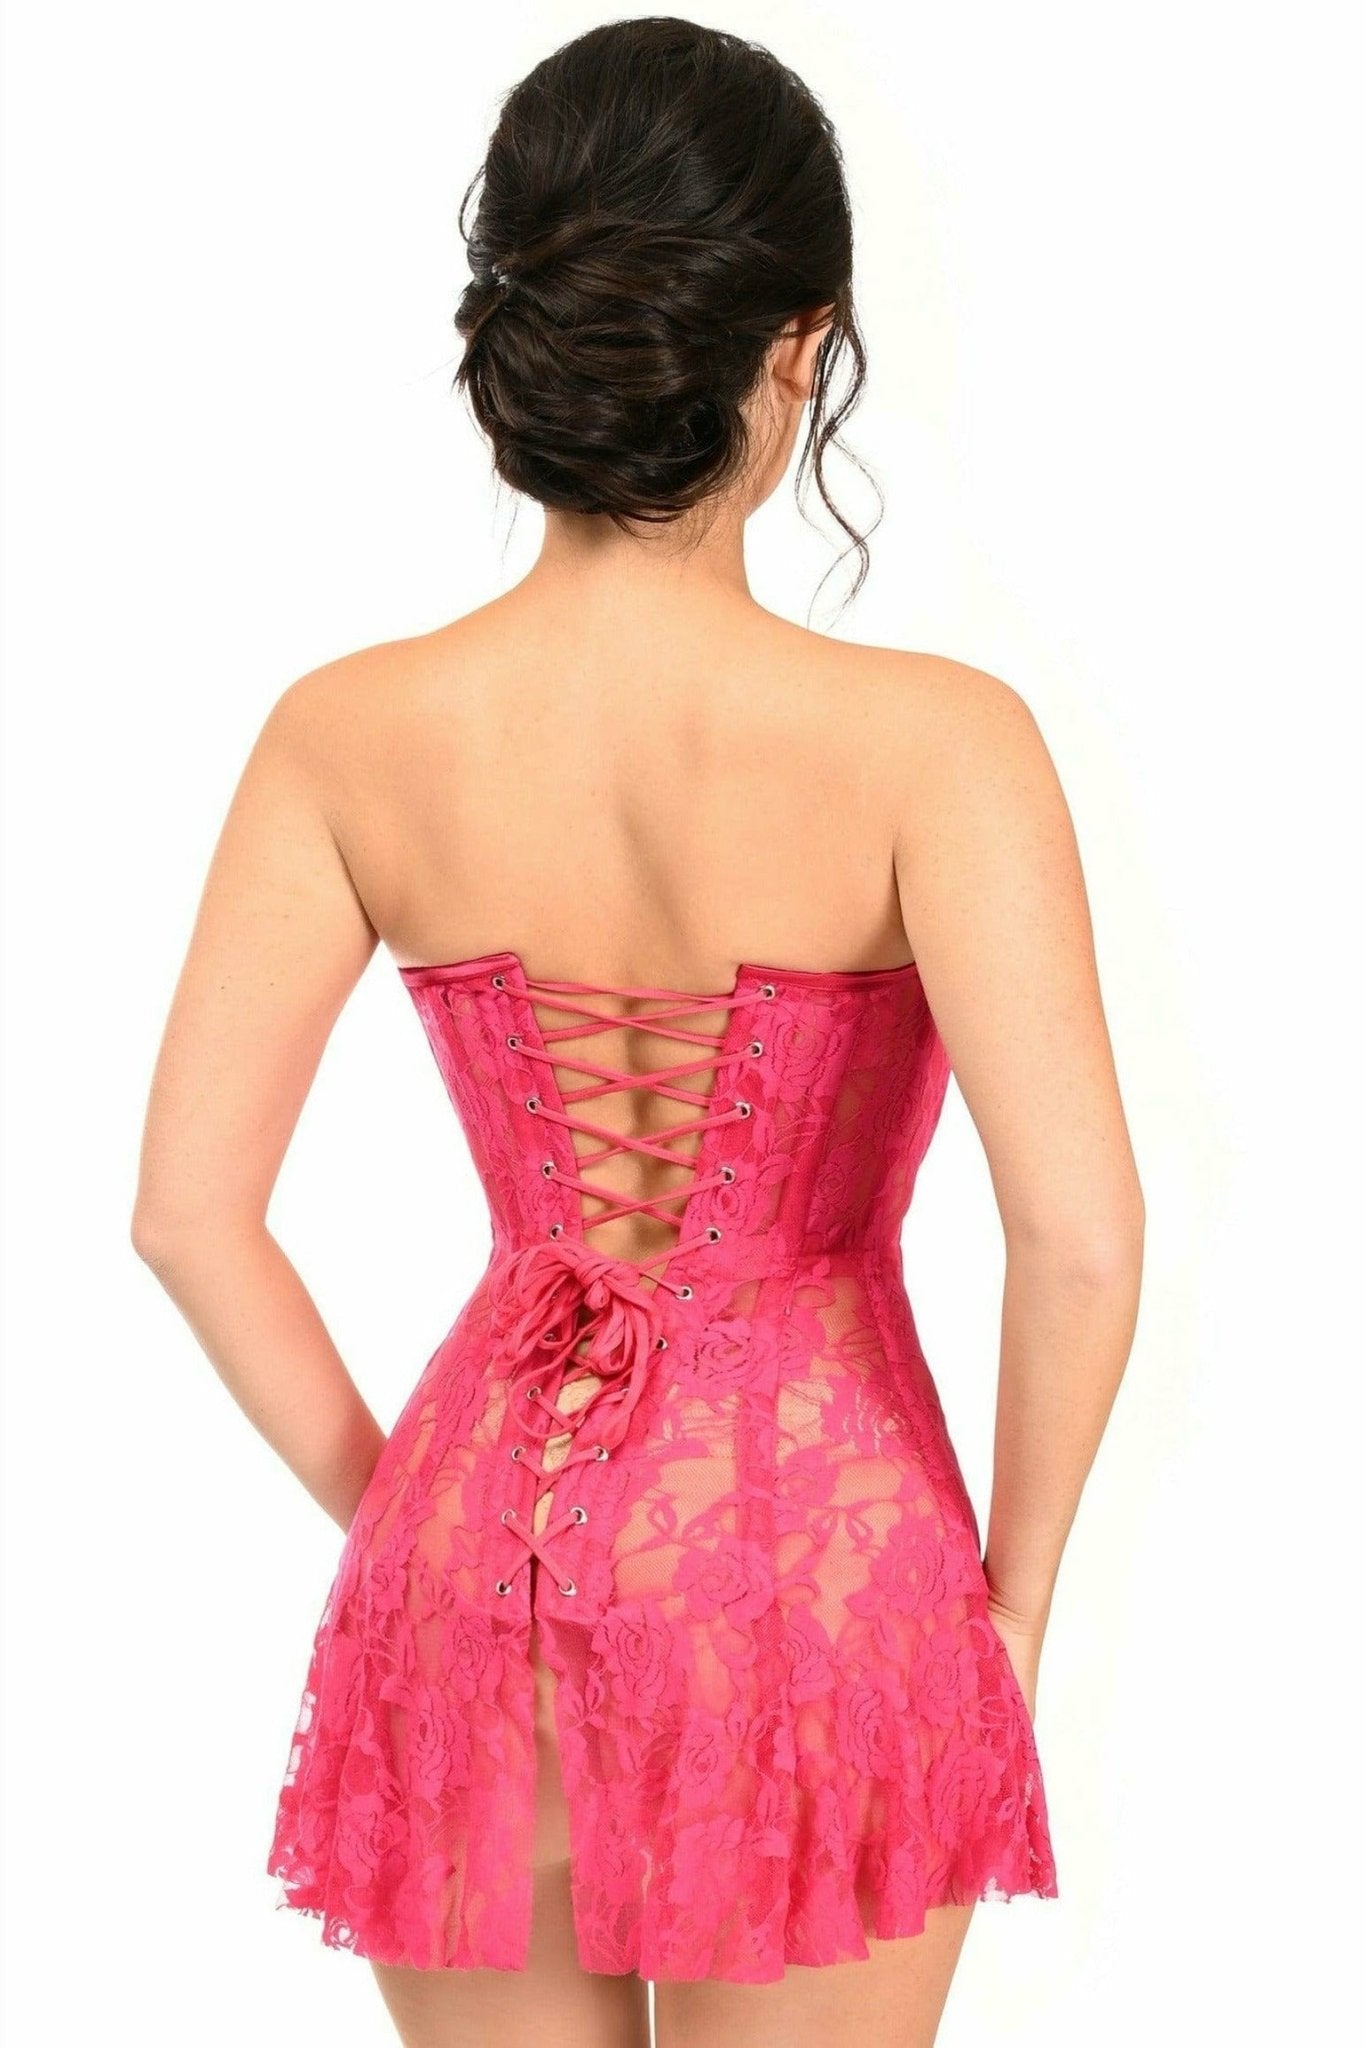 Sexy Fuchsia Sheer Lace Corset Dress Musotica.com